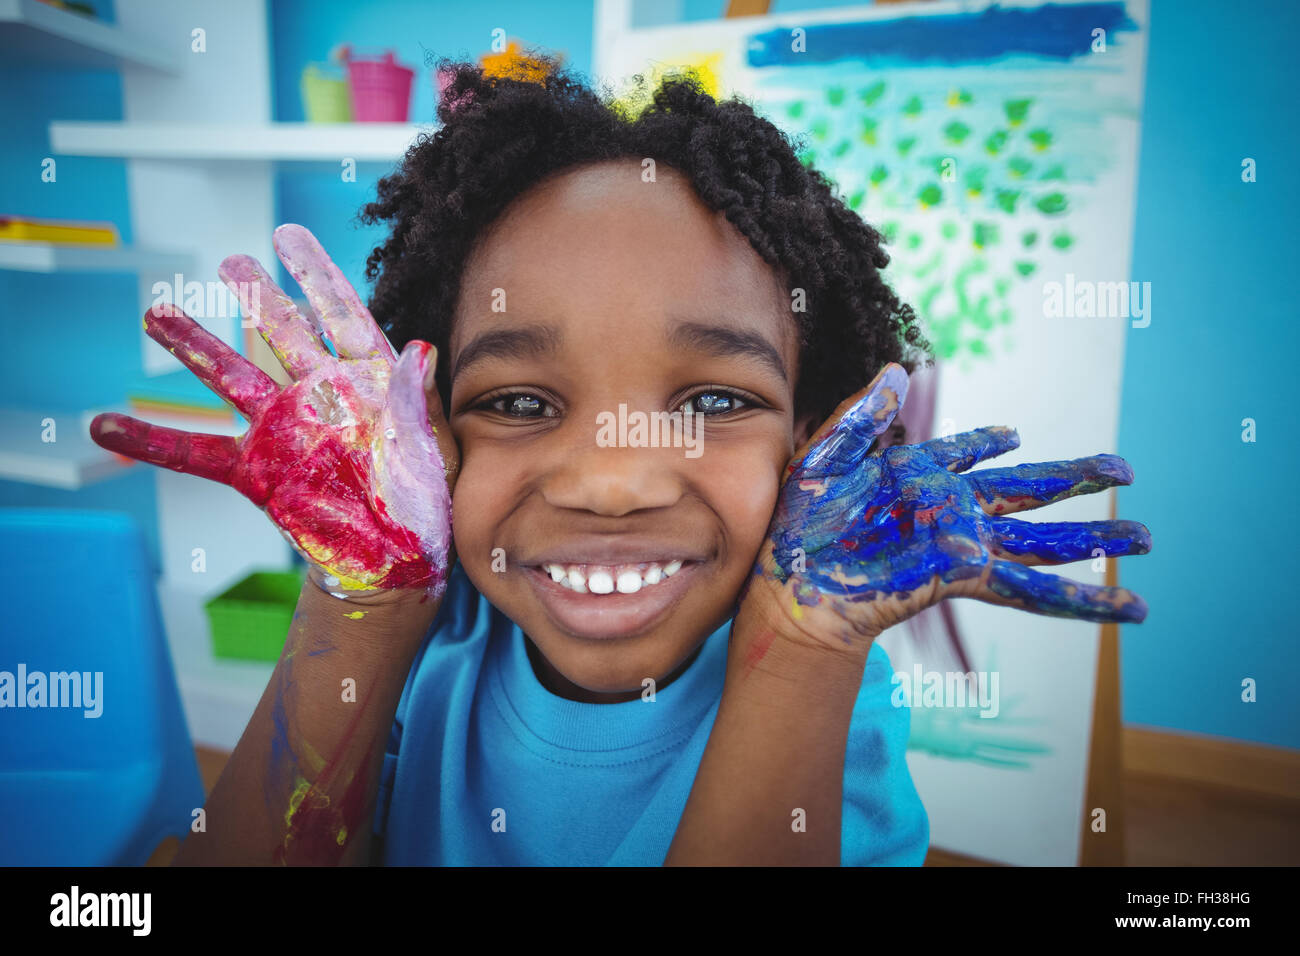 Happy kid enjoying arts and crafts painting Stock Photo